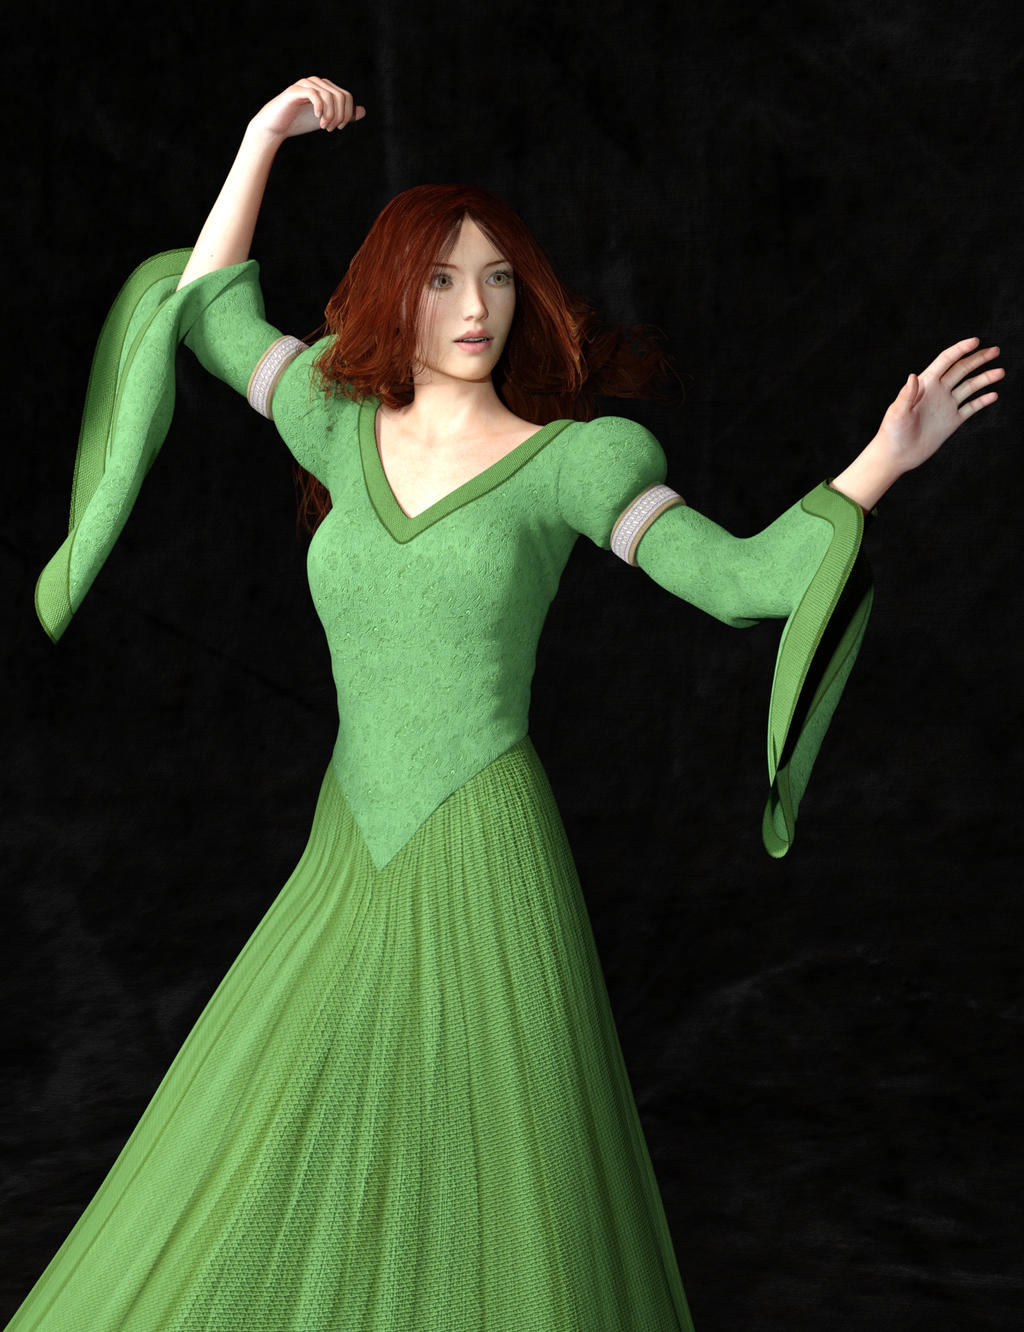 Green Sorceress by dazinbane on DeviantArt